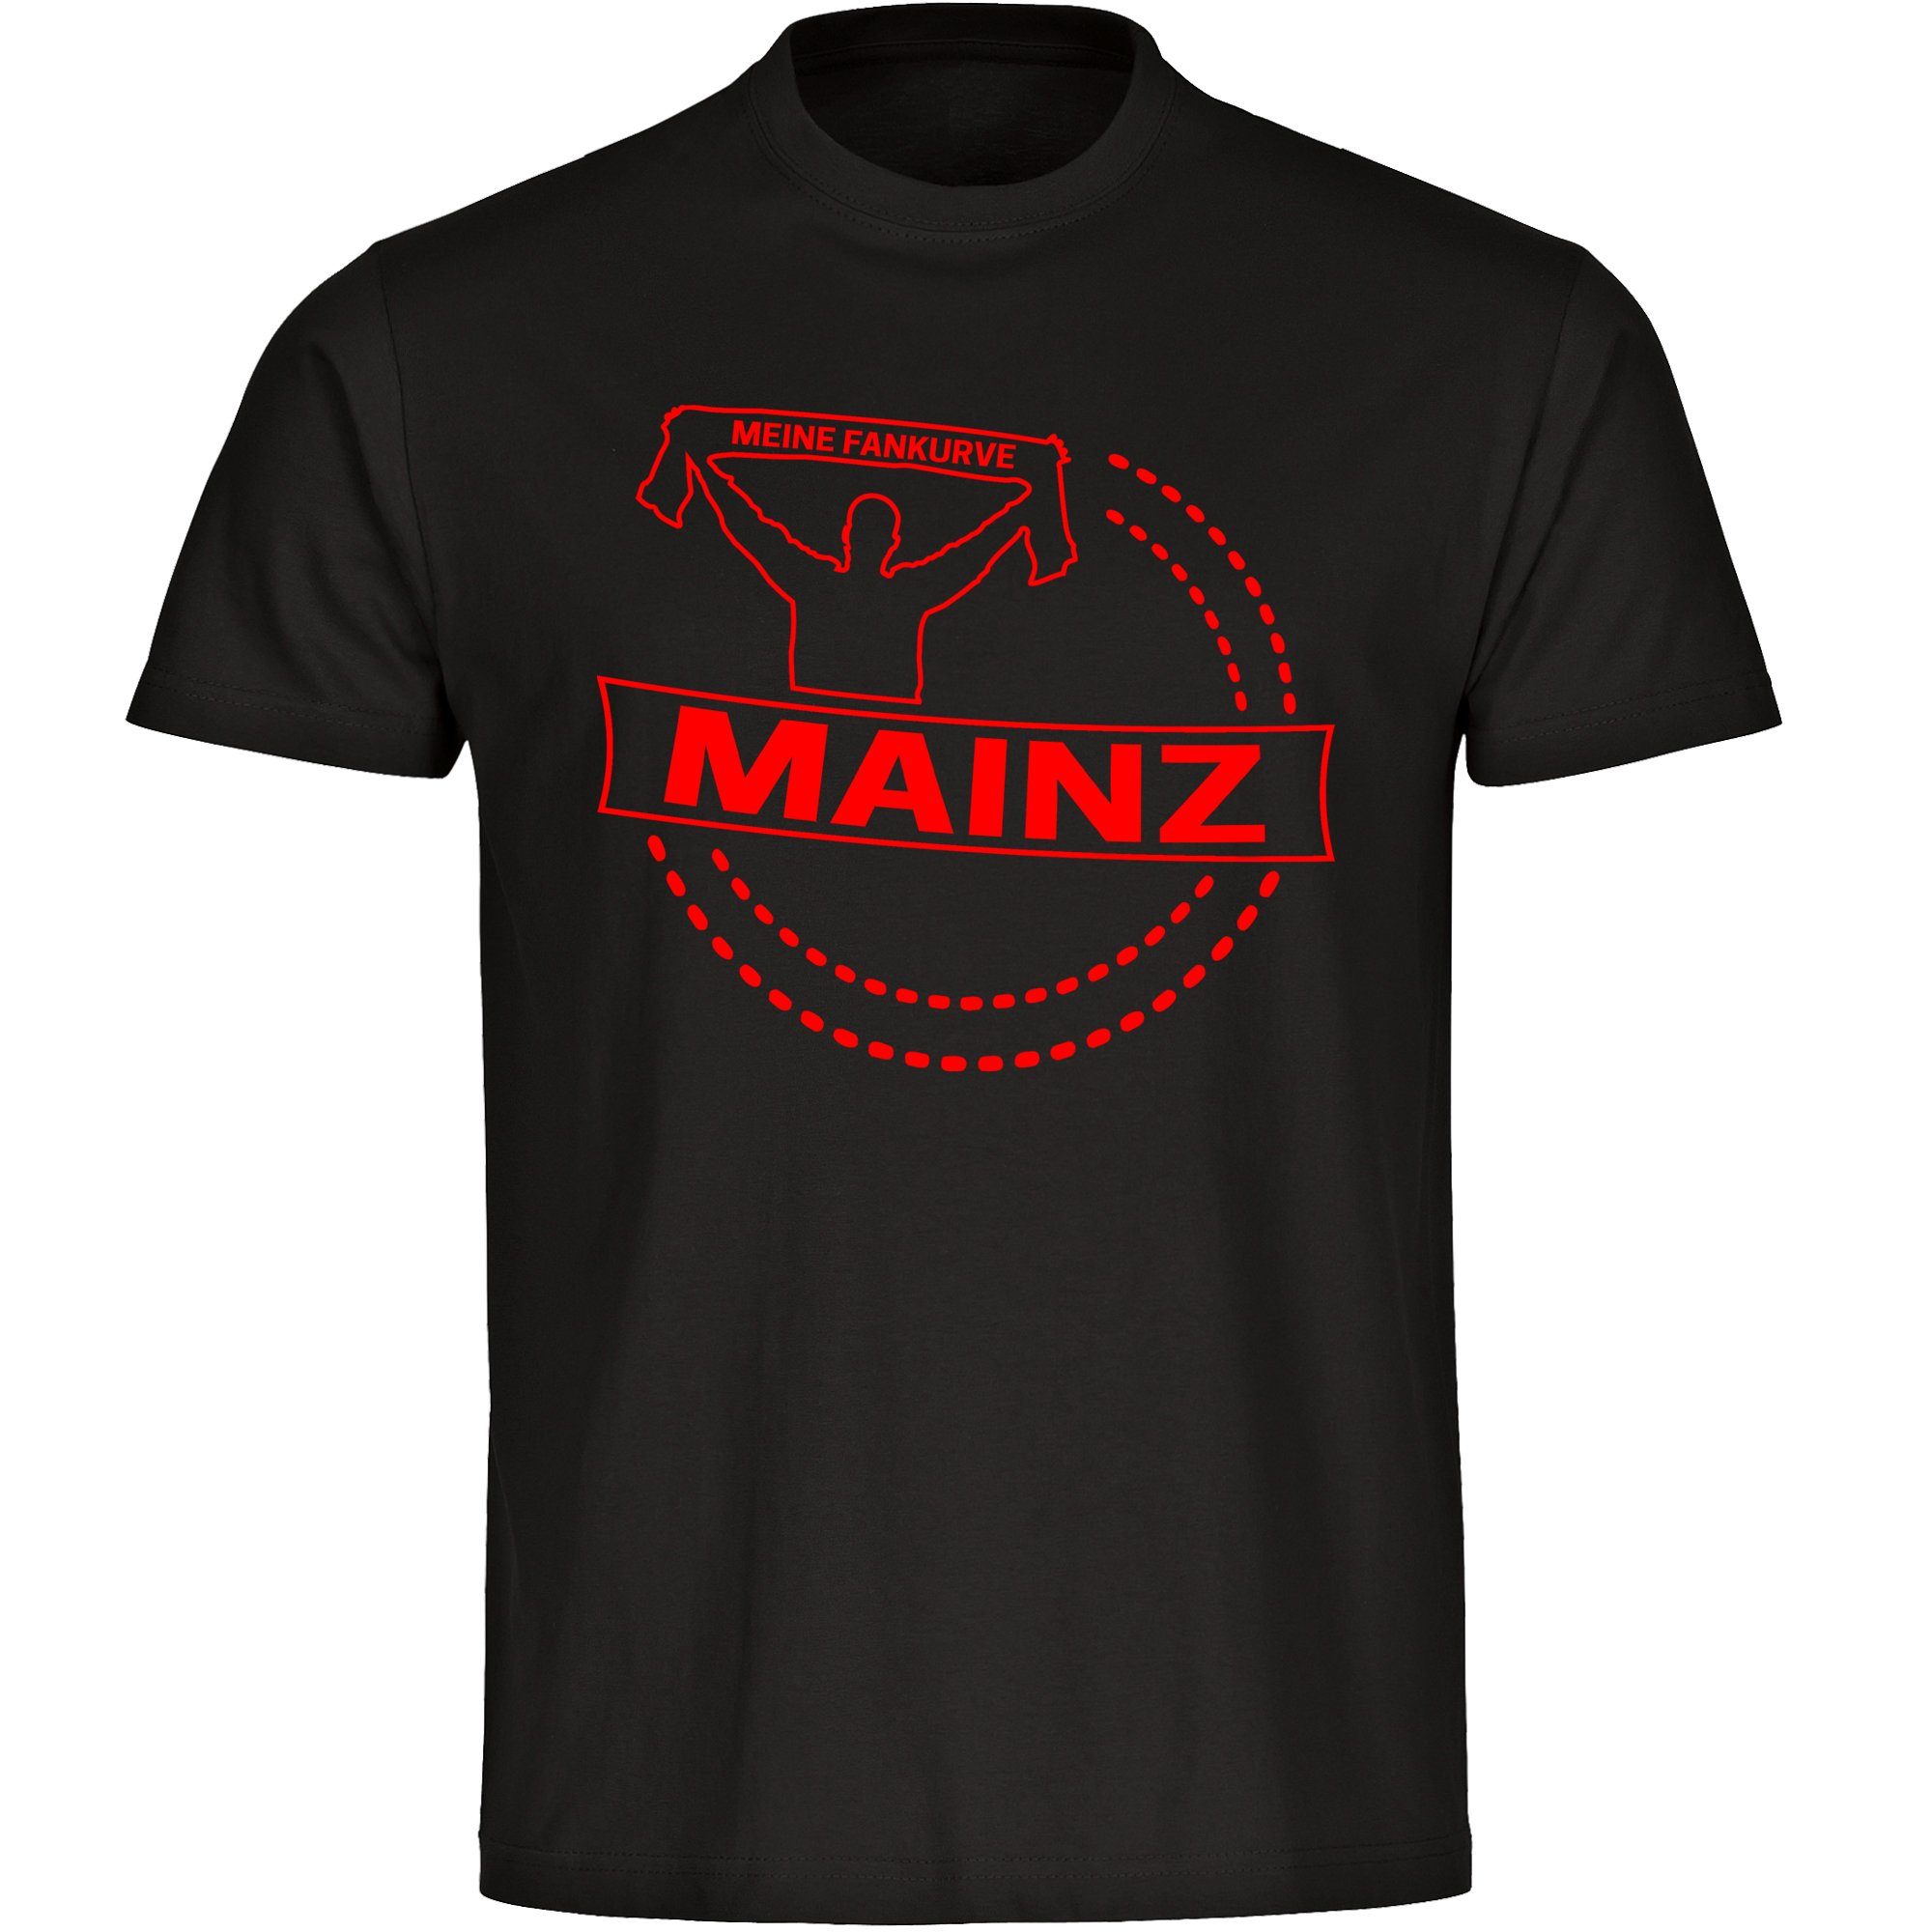 multifanshop T-Shirt Kinder Mainz - Meine Fankurve - Boy Girl